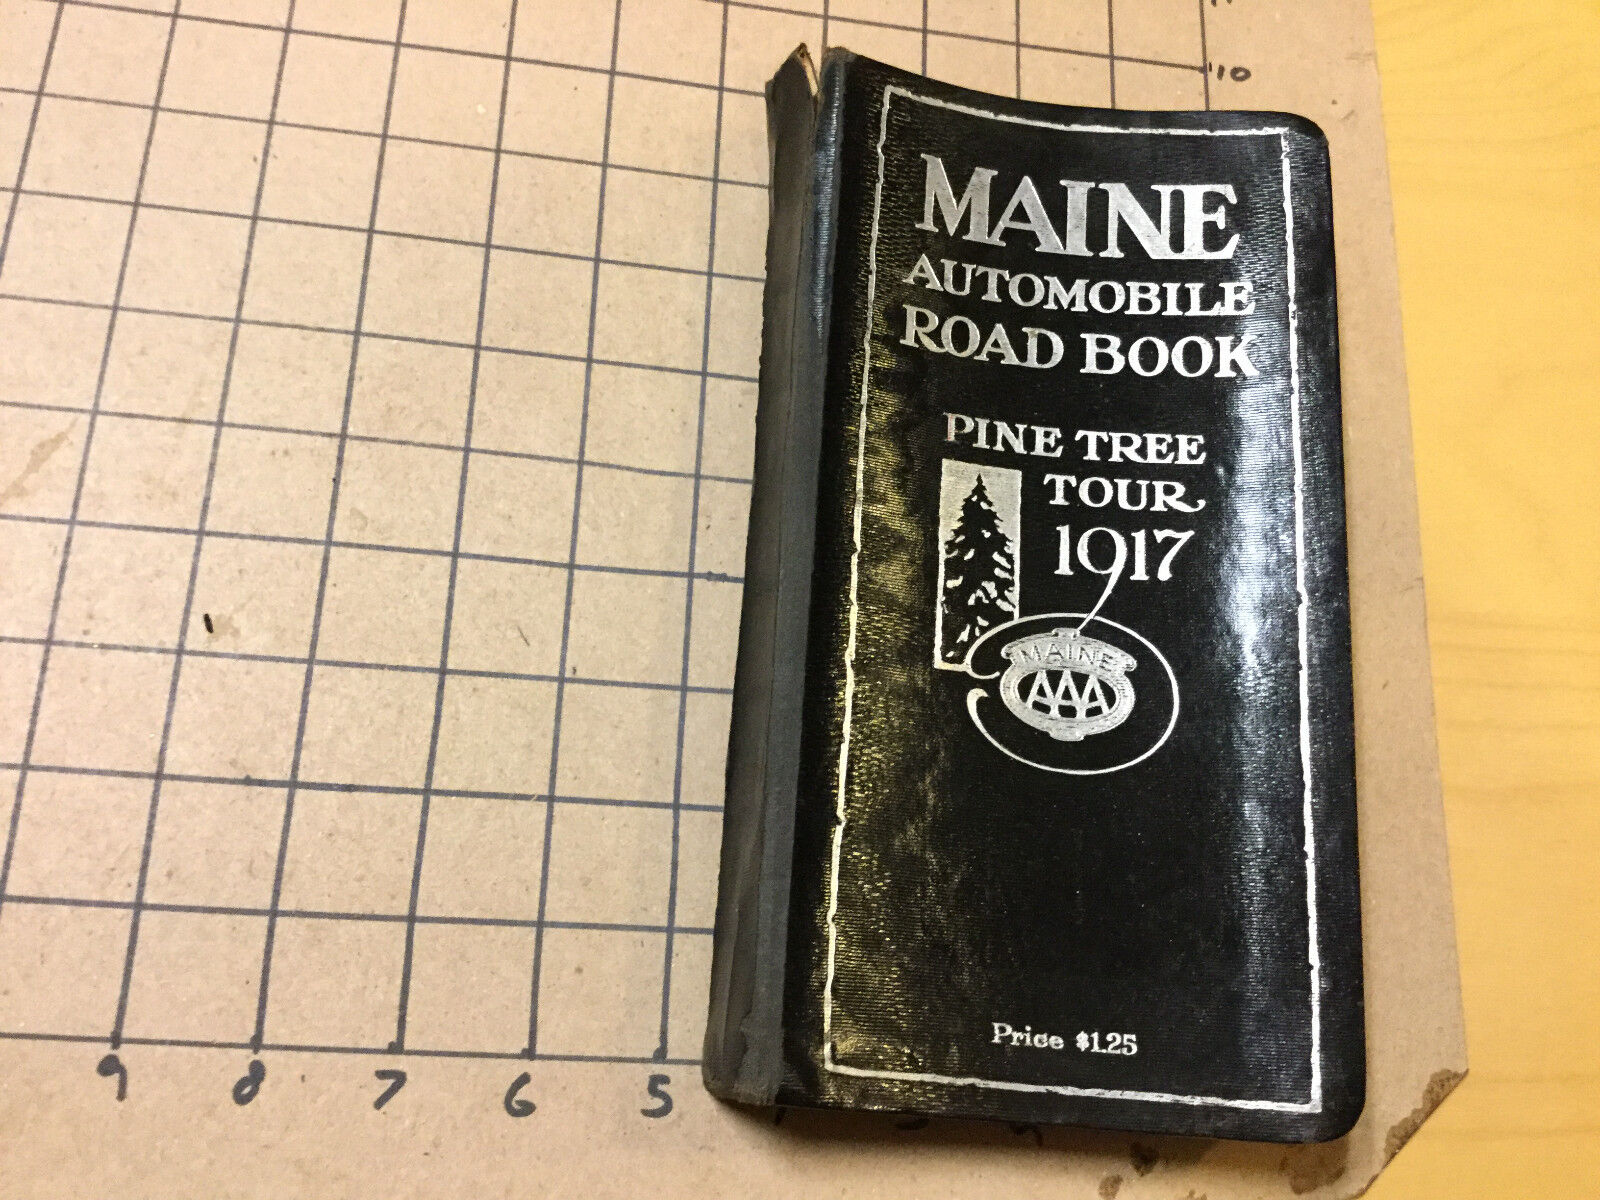 MAINE AUTOMOBILE ROAD BOOK pine tree tour 1917 -- 477pgs